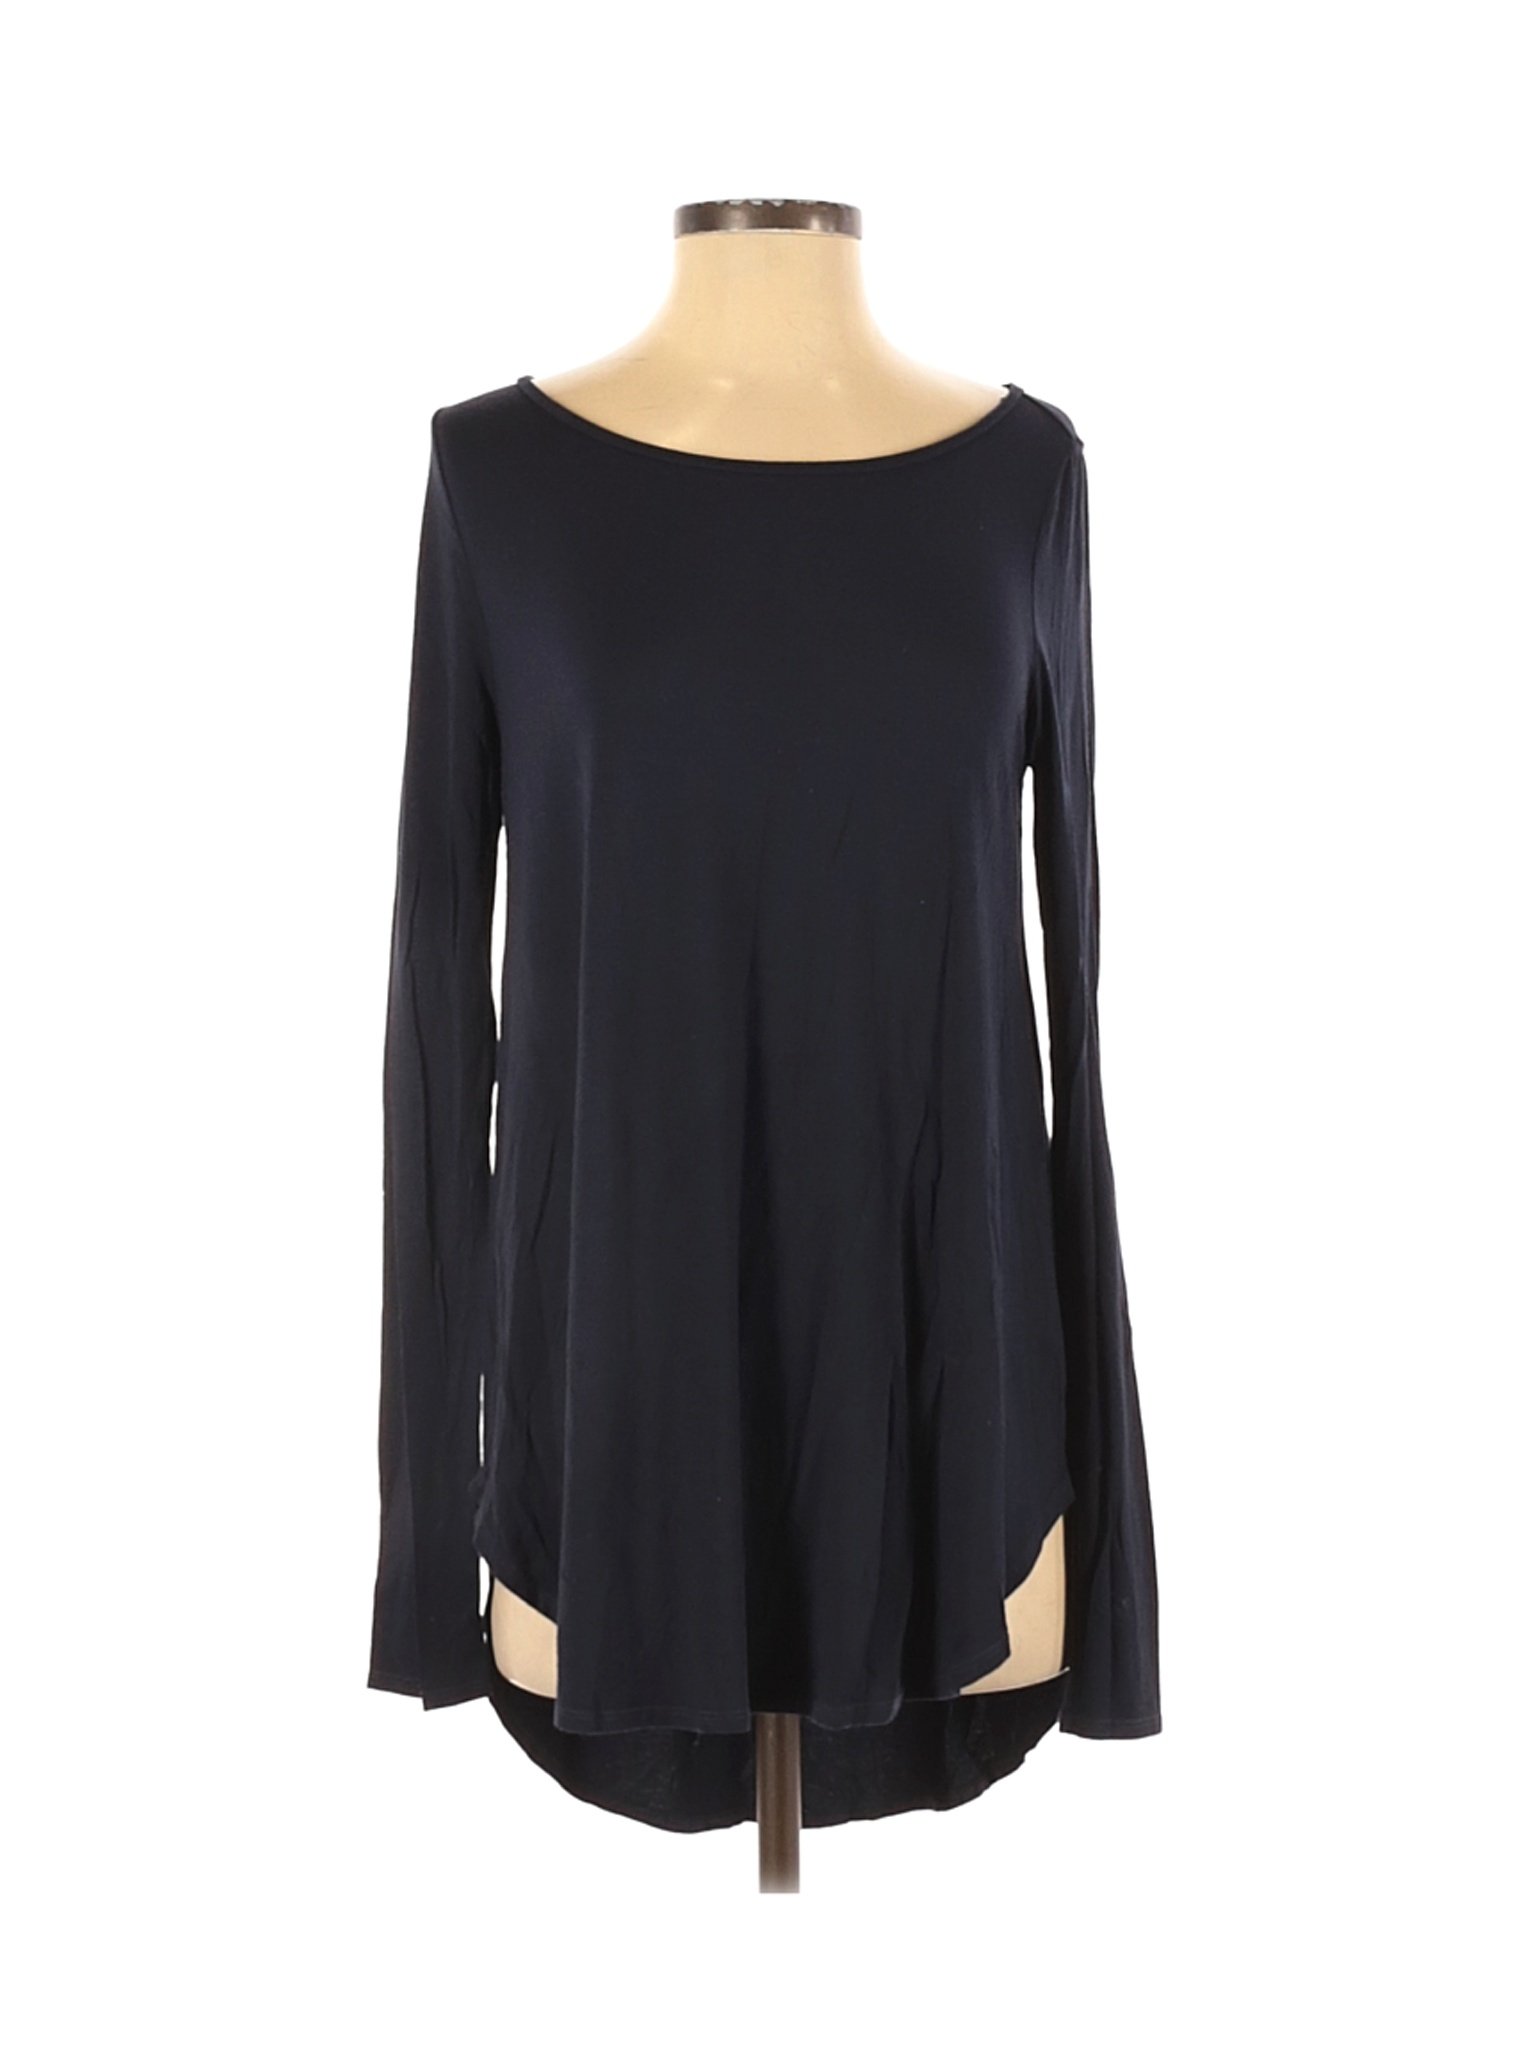 Calypso St. Barth Women Black Long Sleeve T-Shirt S | eBay